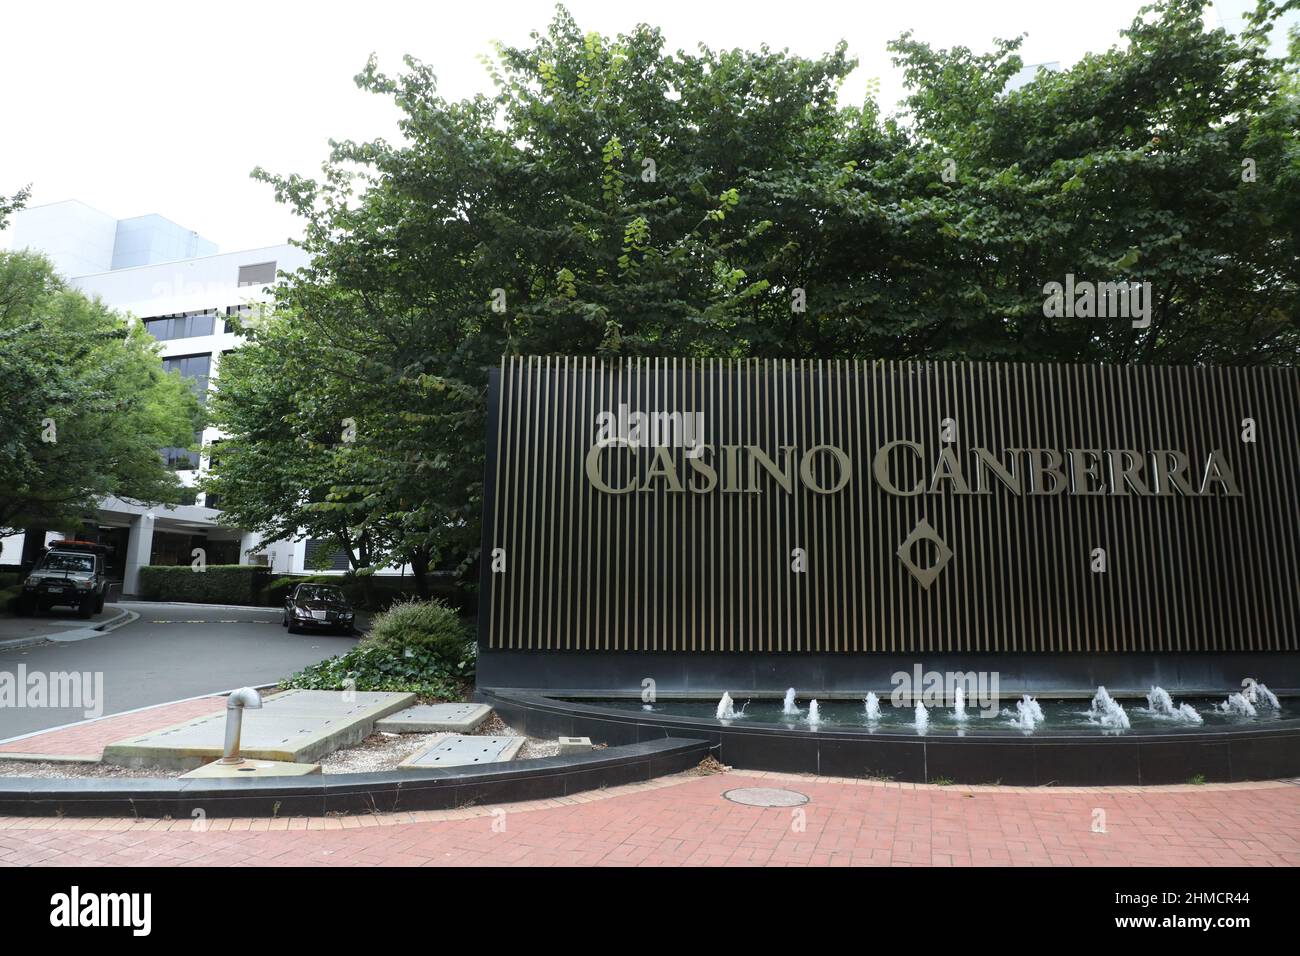 Casino Canberra, 21 Binara Street, Canberra ACT 2601 Stock Photo